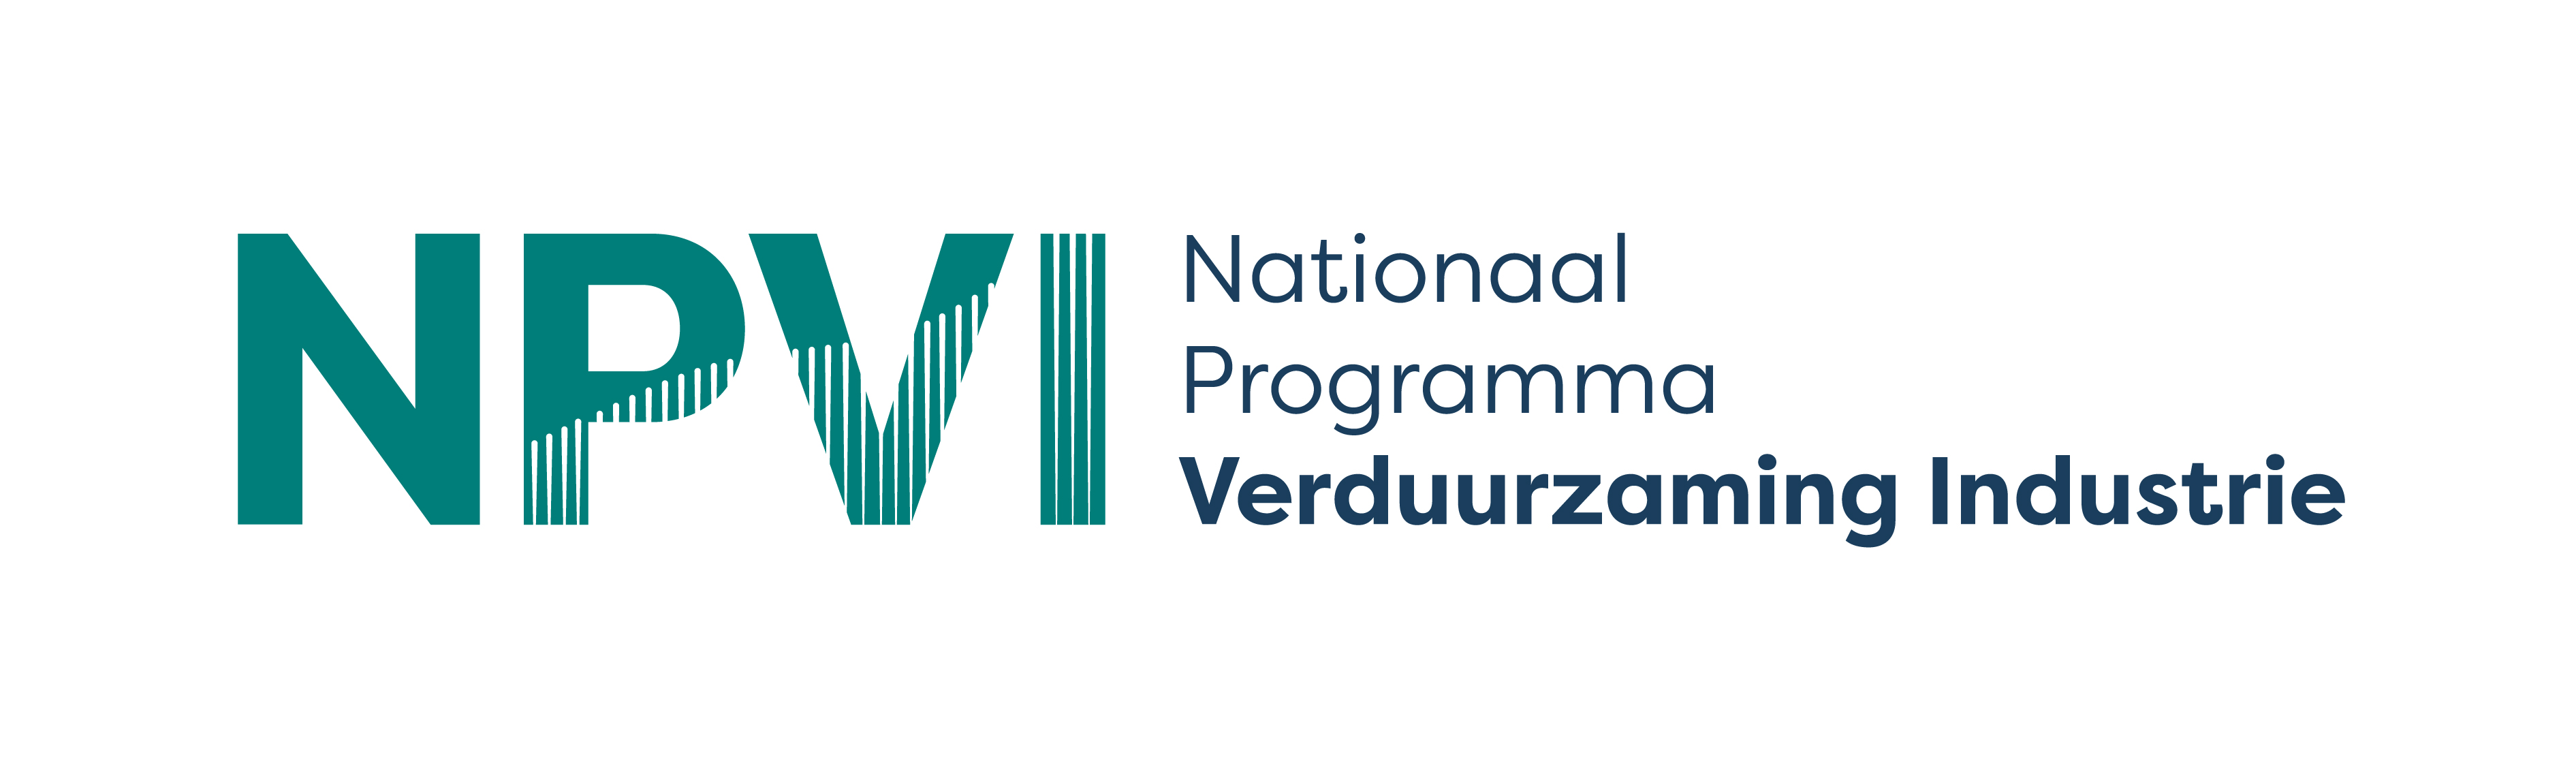 Platform Verduurzaming Industrie logo